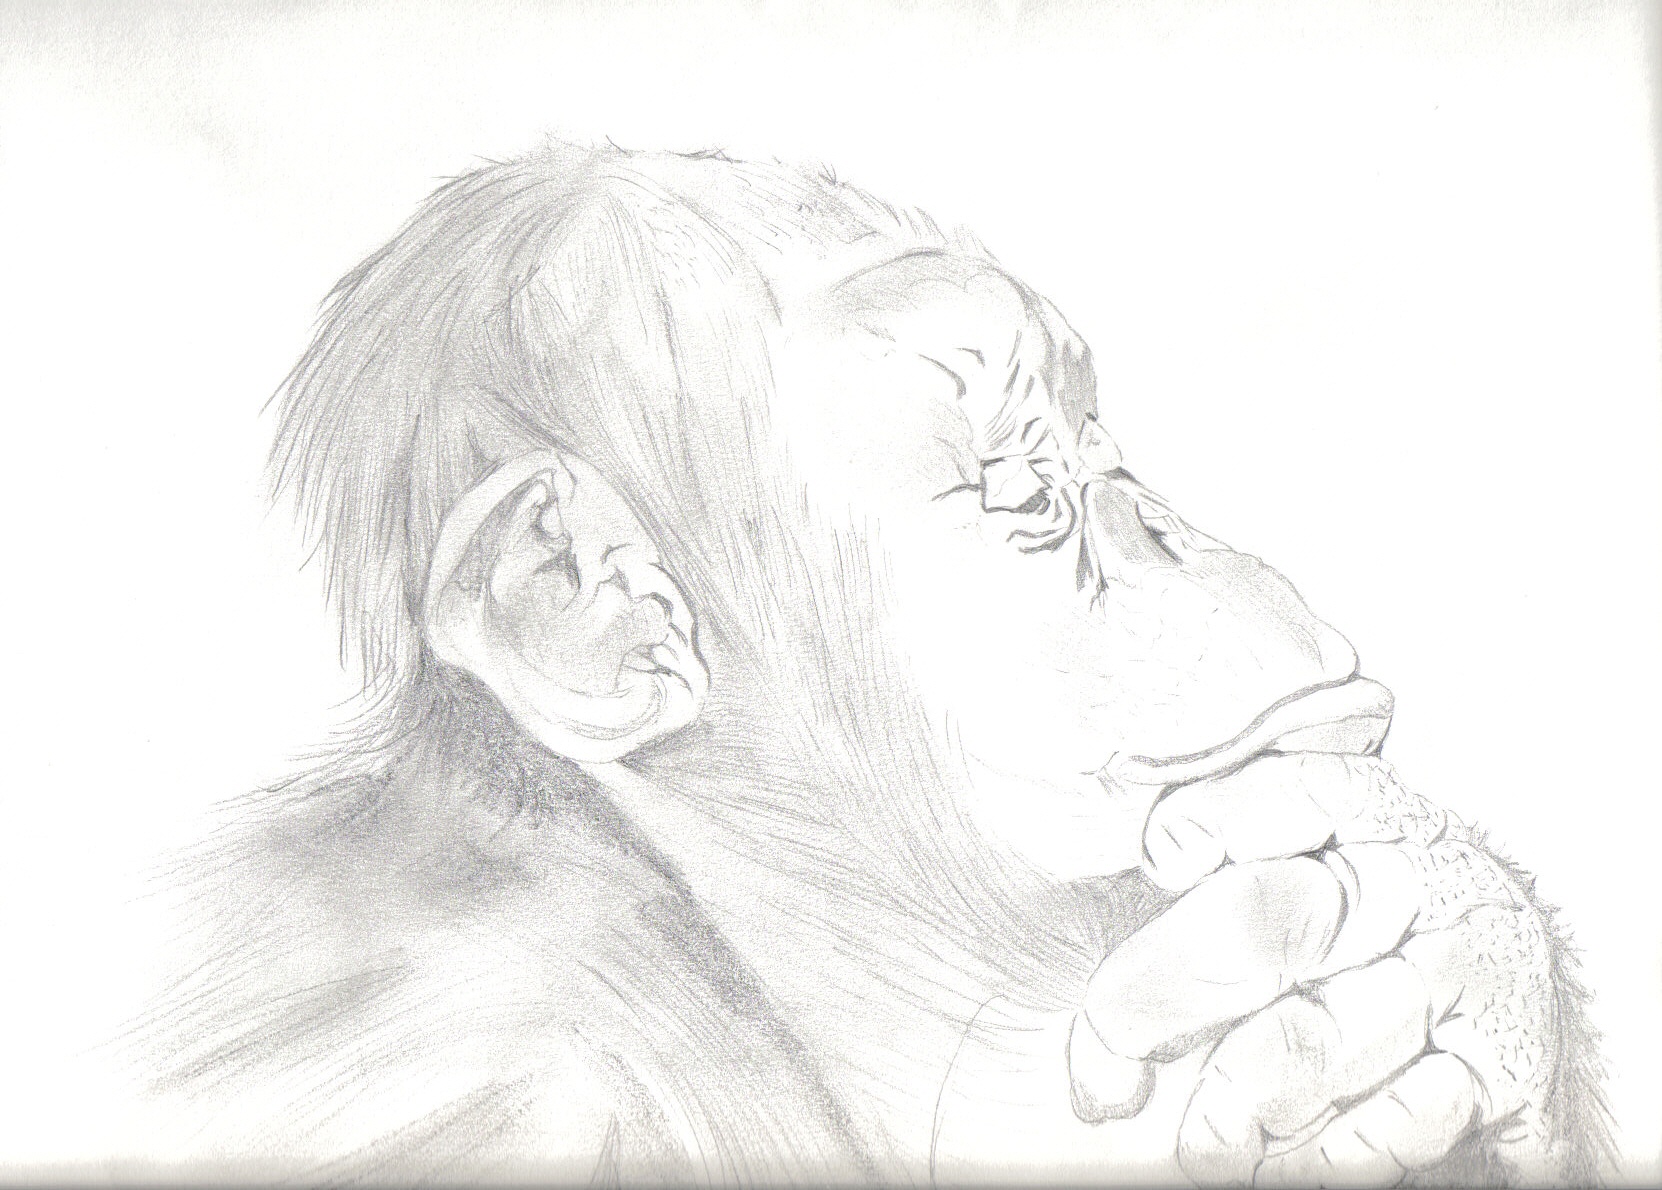 A sketch of a chimpanzee thinking